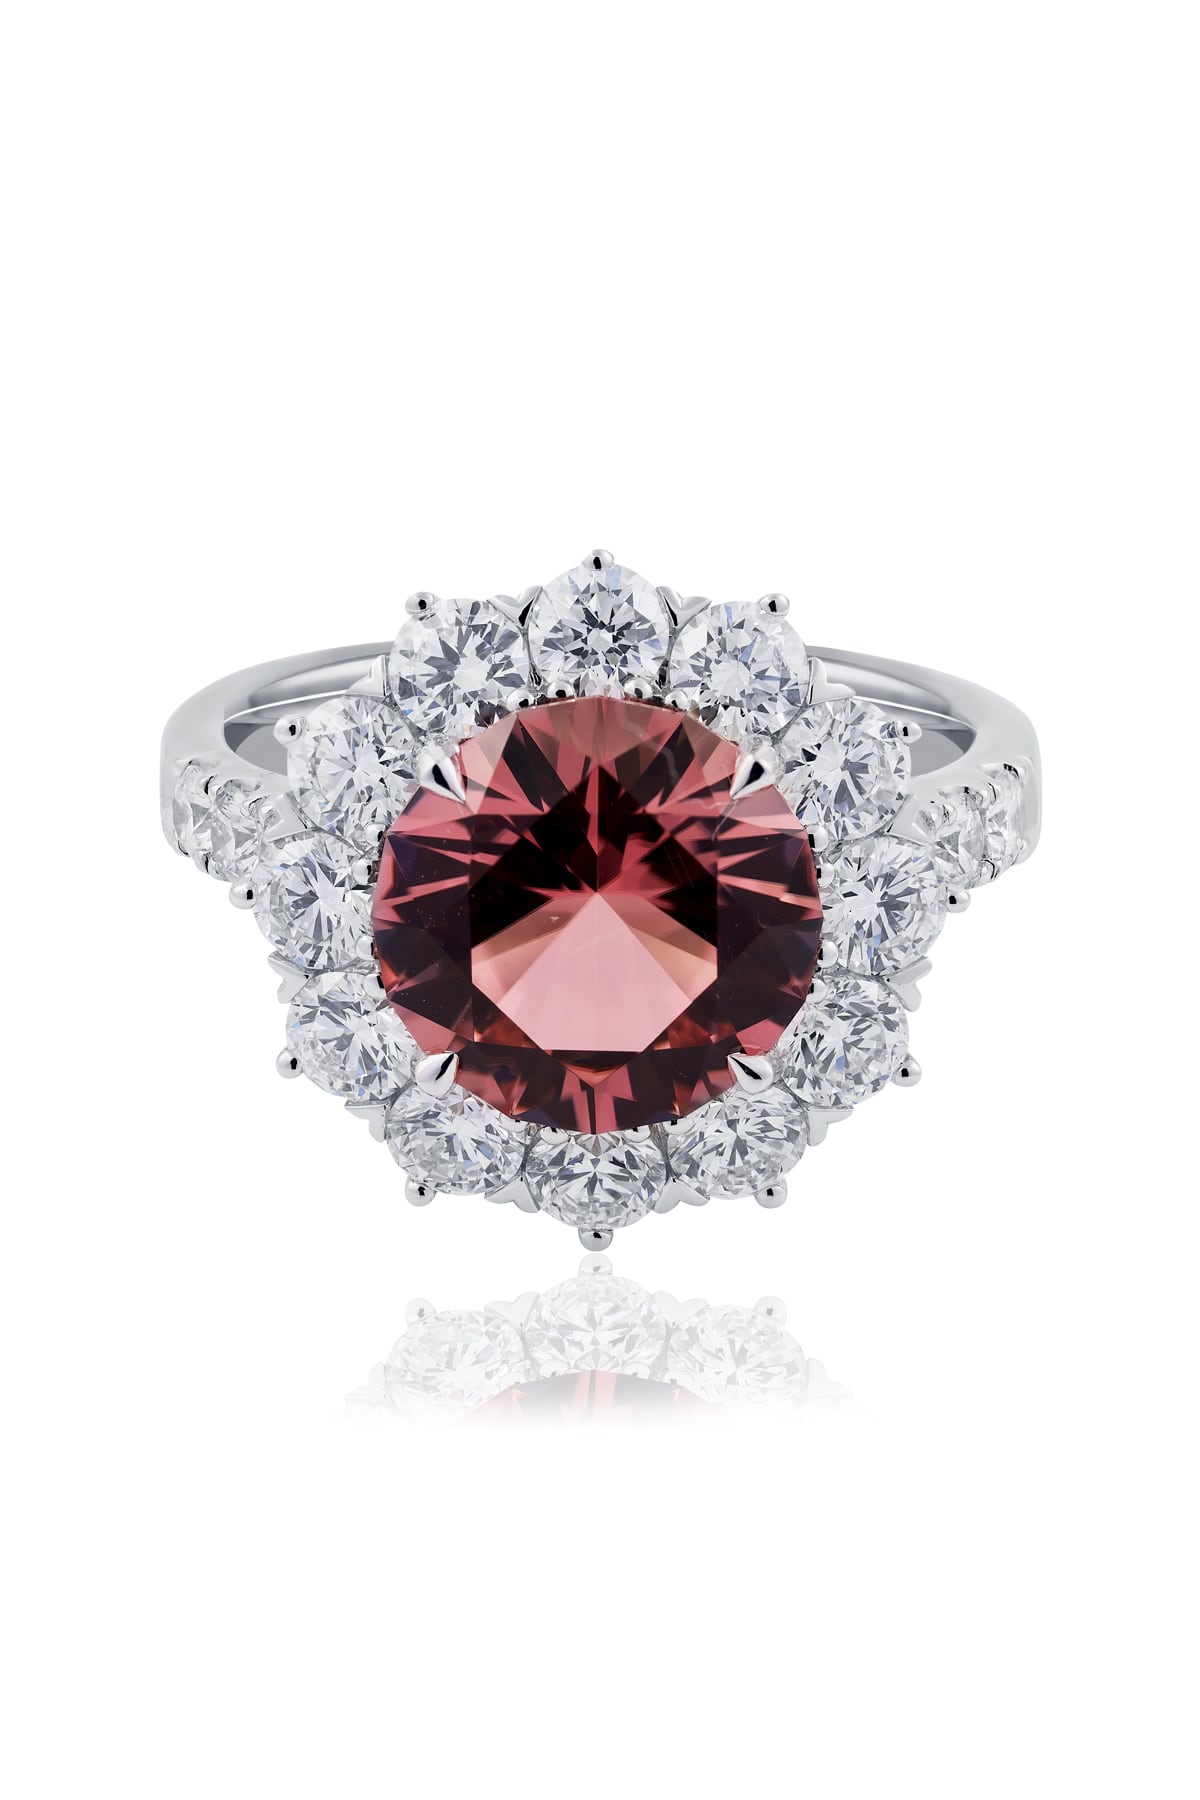 Blush Pink Tourmaline Ring With Diamond Halo from LeGassick.